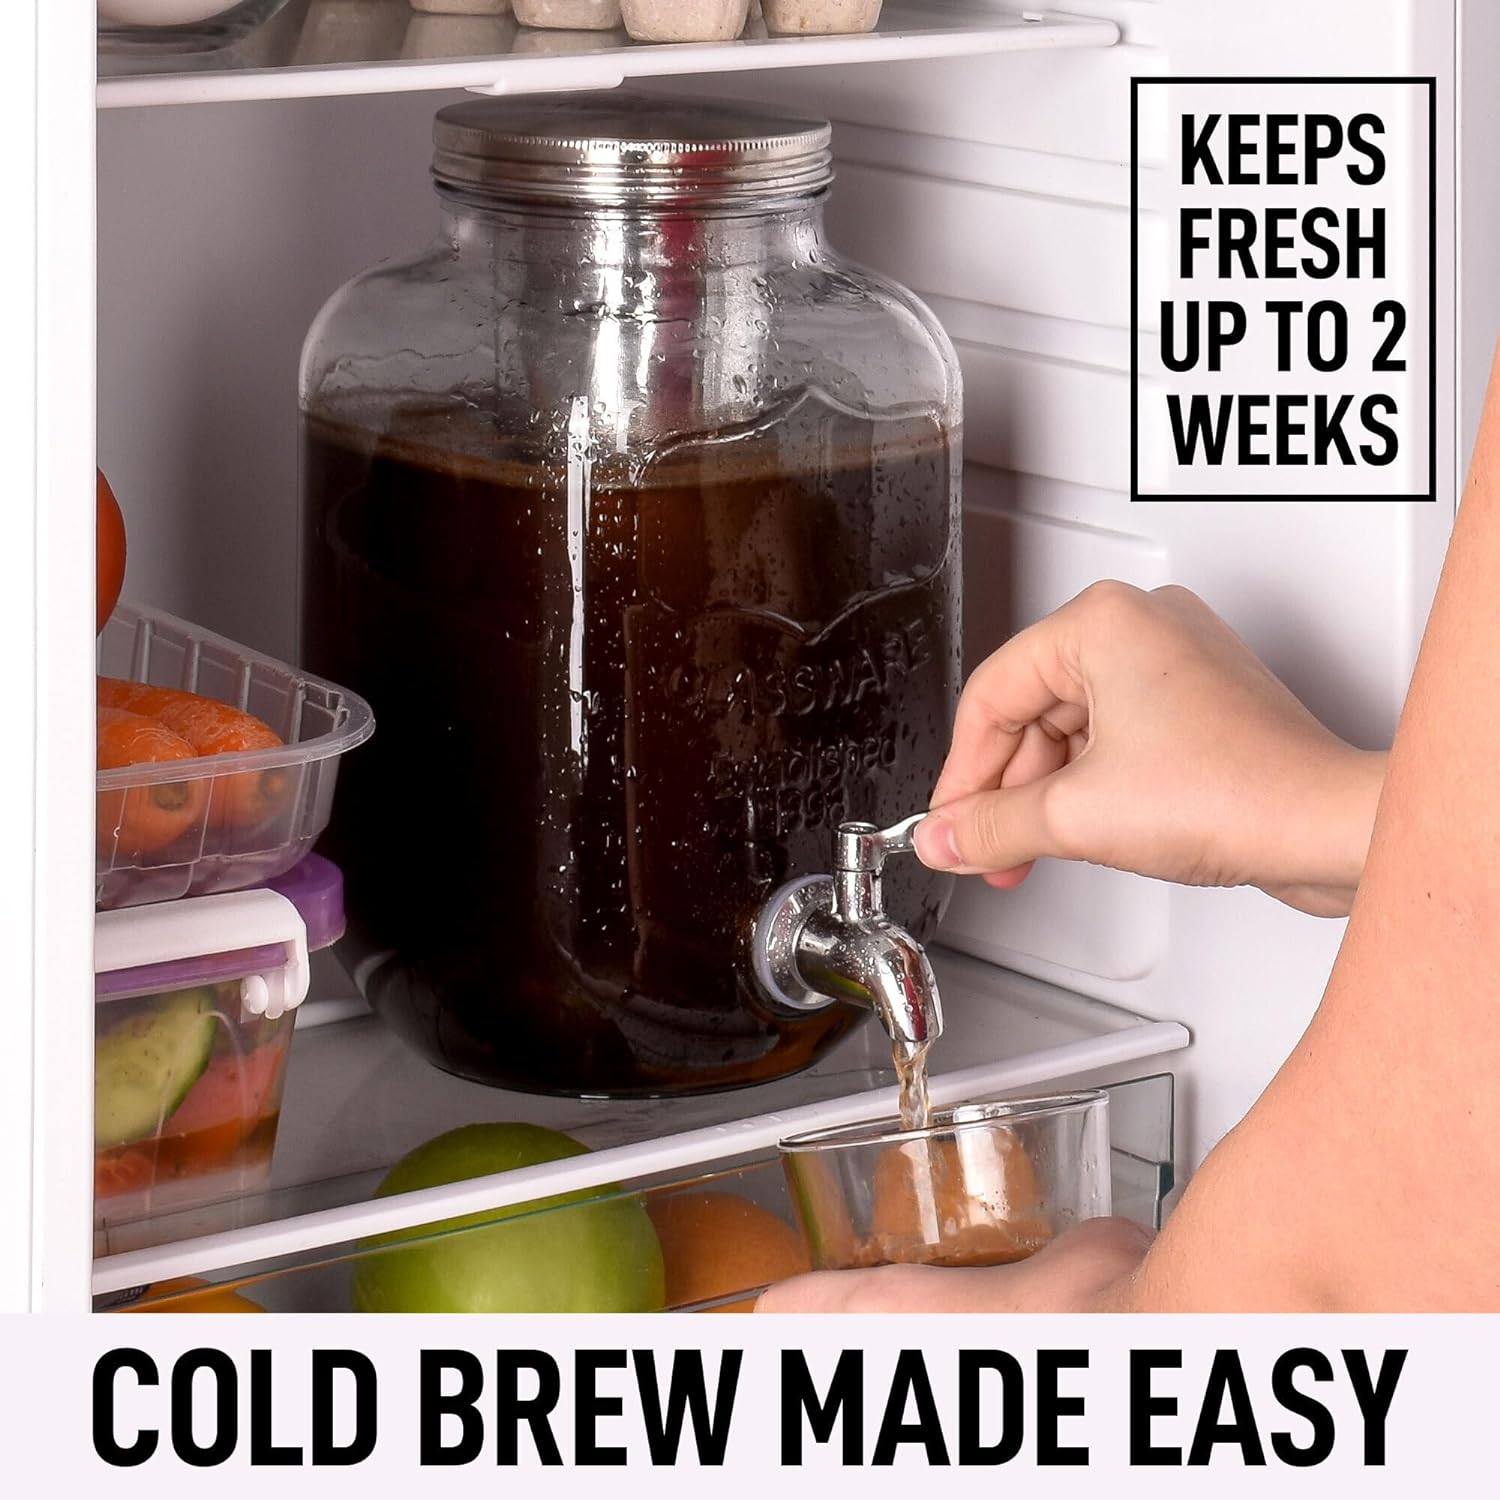 NWT Bean Envy Cold Brew Coffee Maker - Depop